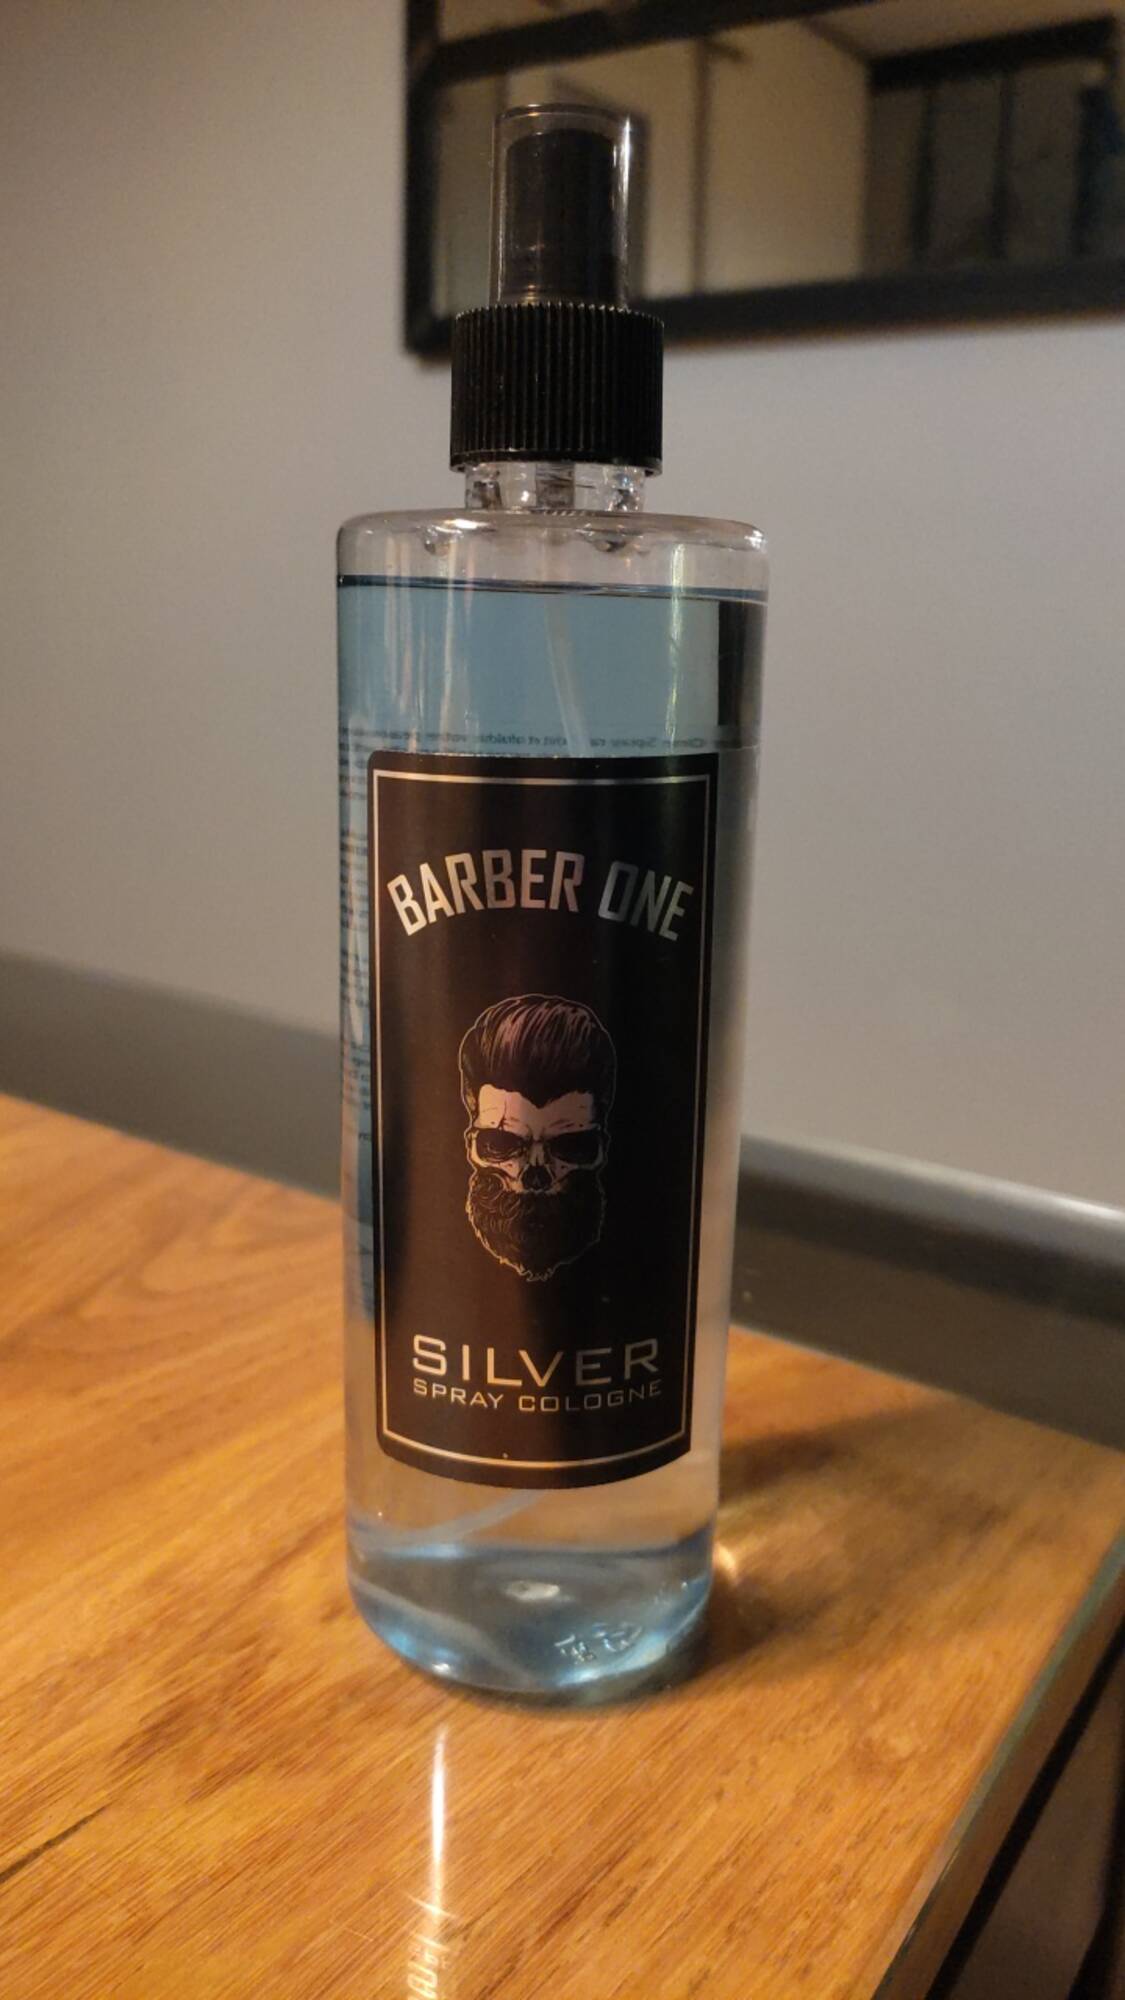 BARBER ONE - Silver spray cologne